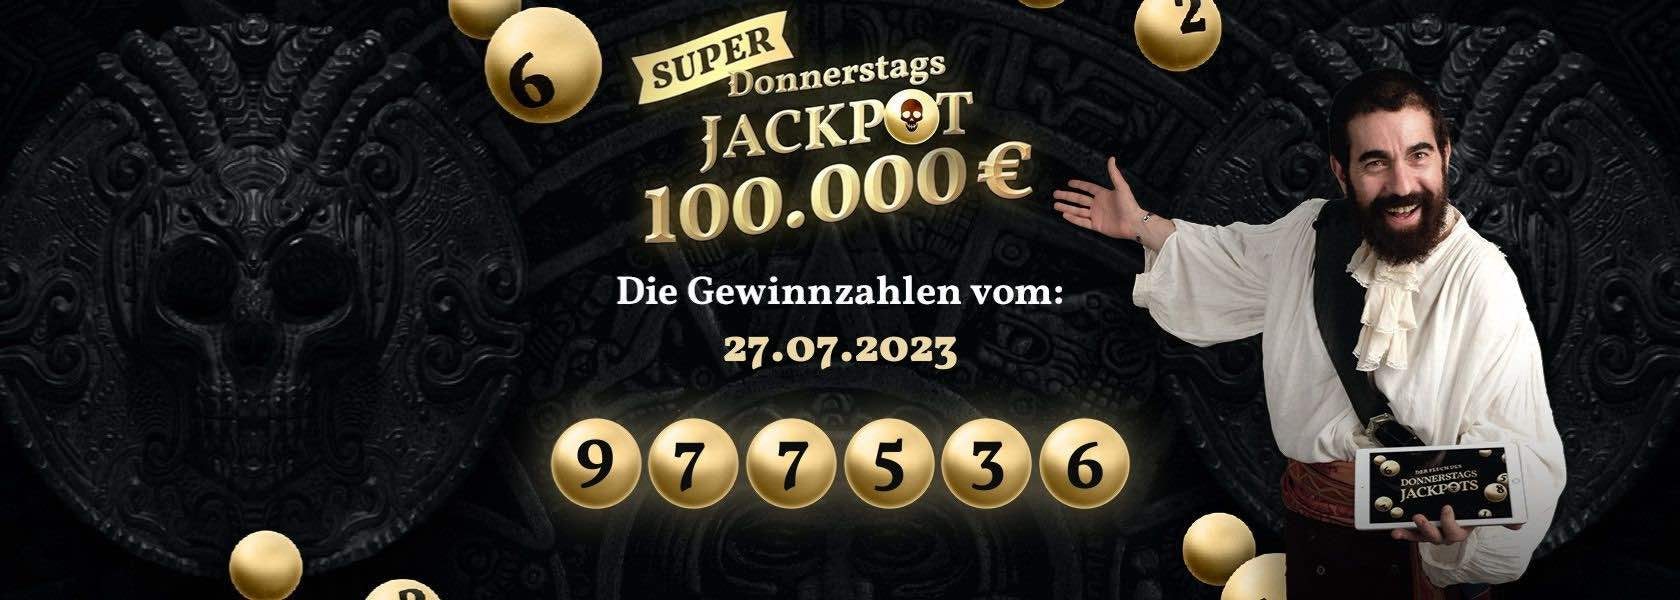 jackpot-heute-zahlen-super-donnerstag-27072023-jackpotpiraten